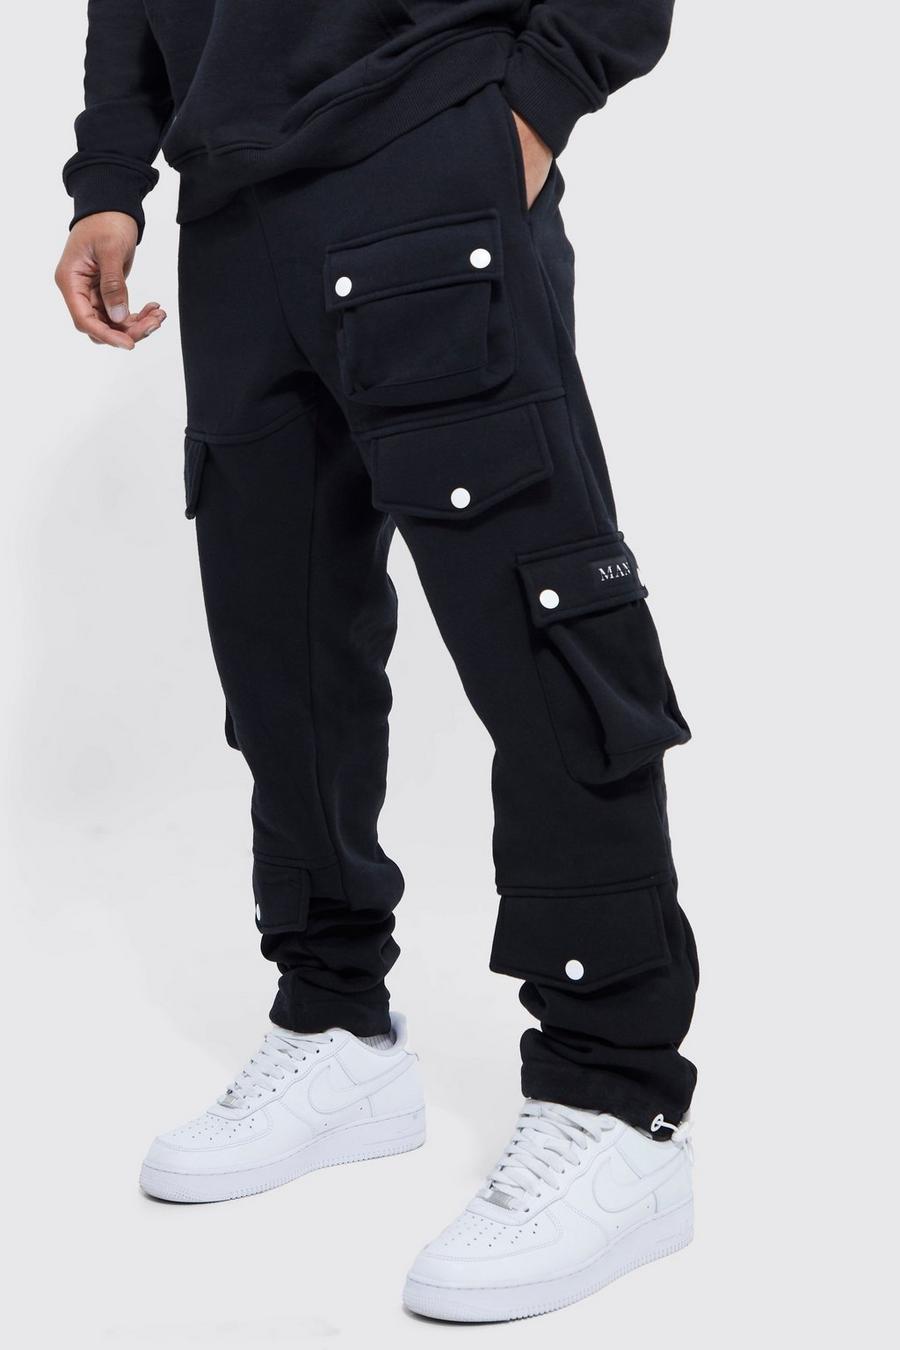 Pantalón deportivo Tall con multibolsillos cargo y botamanga, Black nero